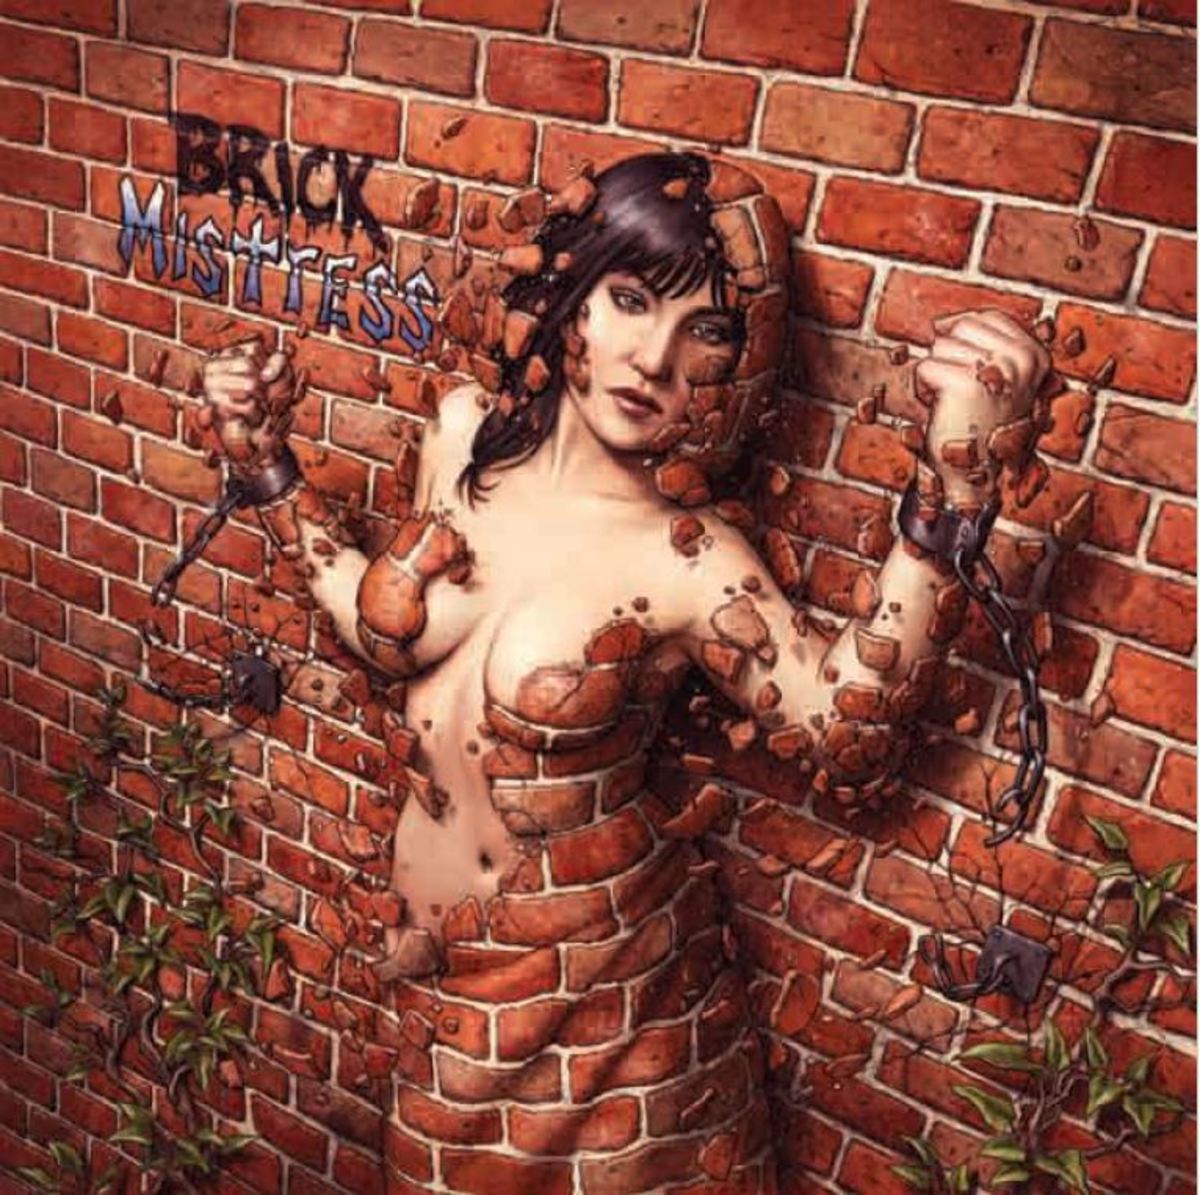 Brick Mistress, Anthology